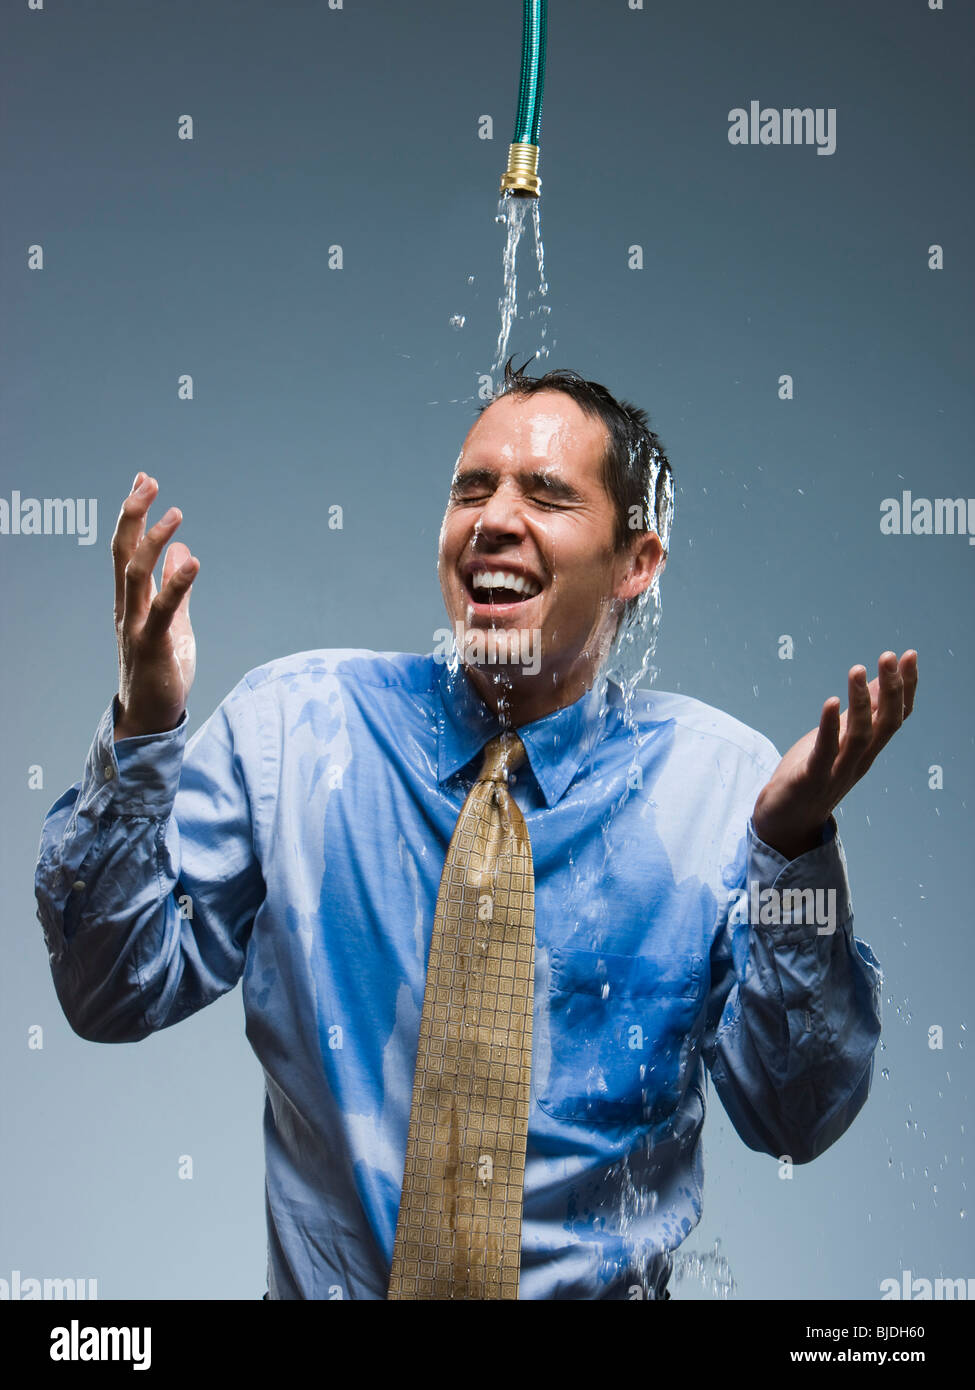 businessman standing under a hose Stock Photo